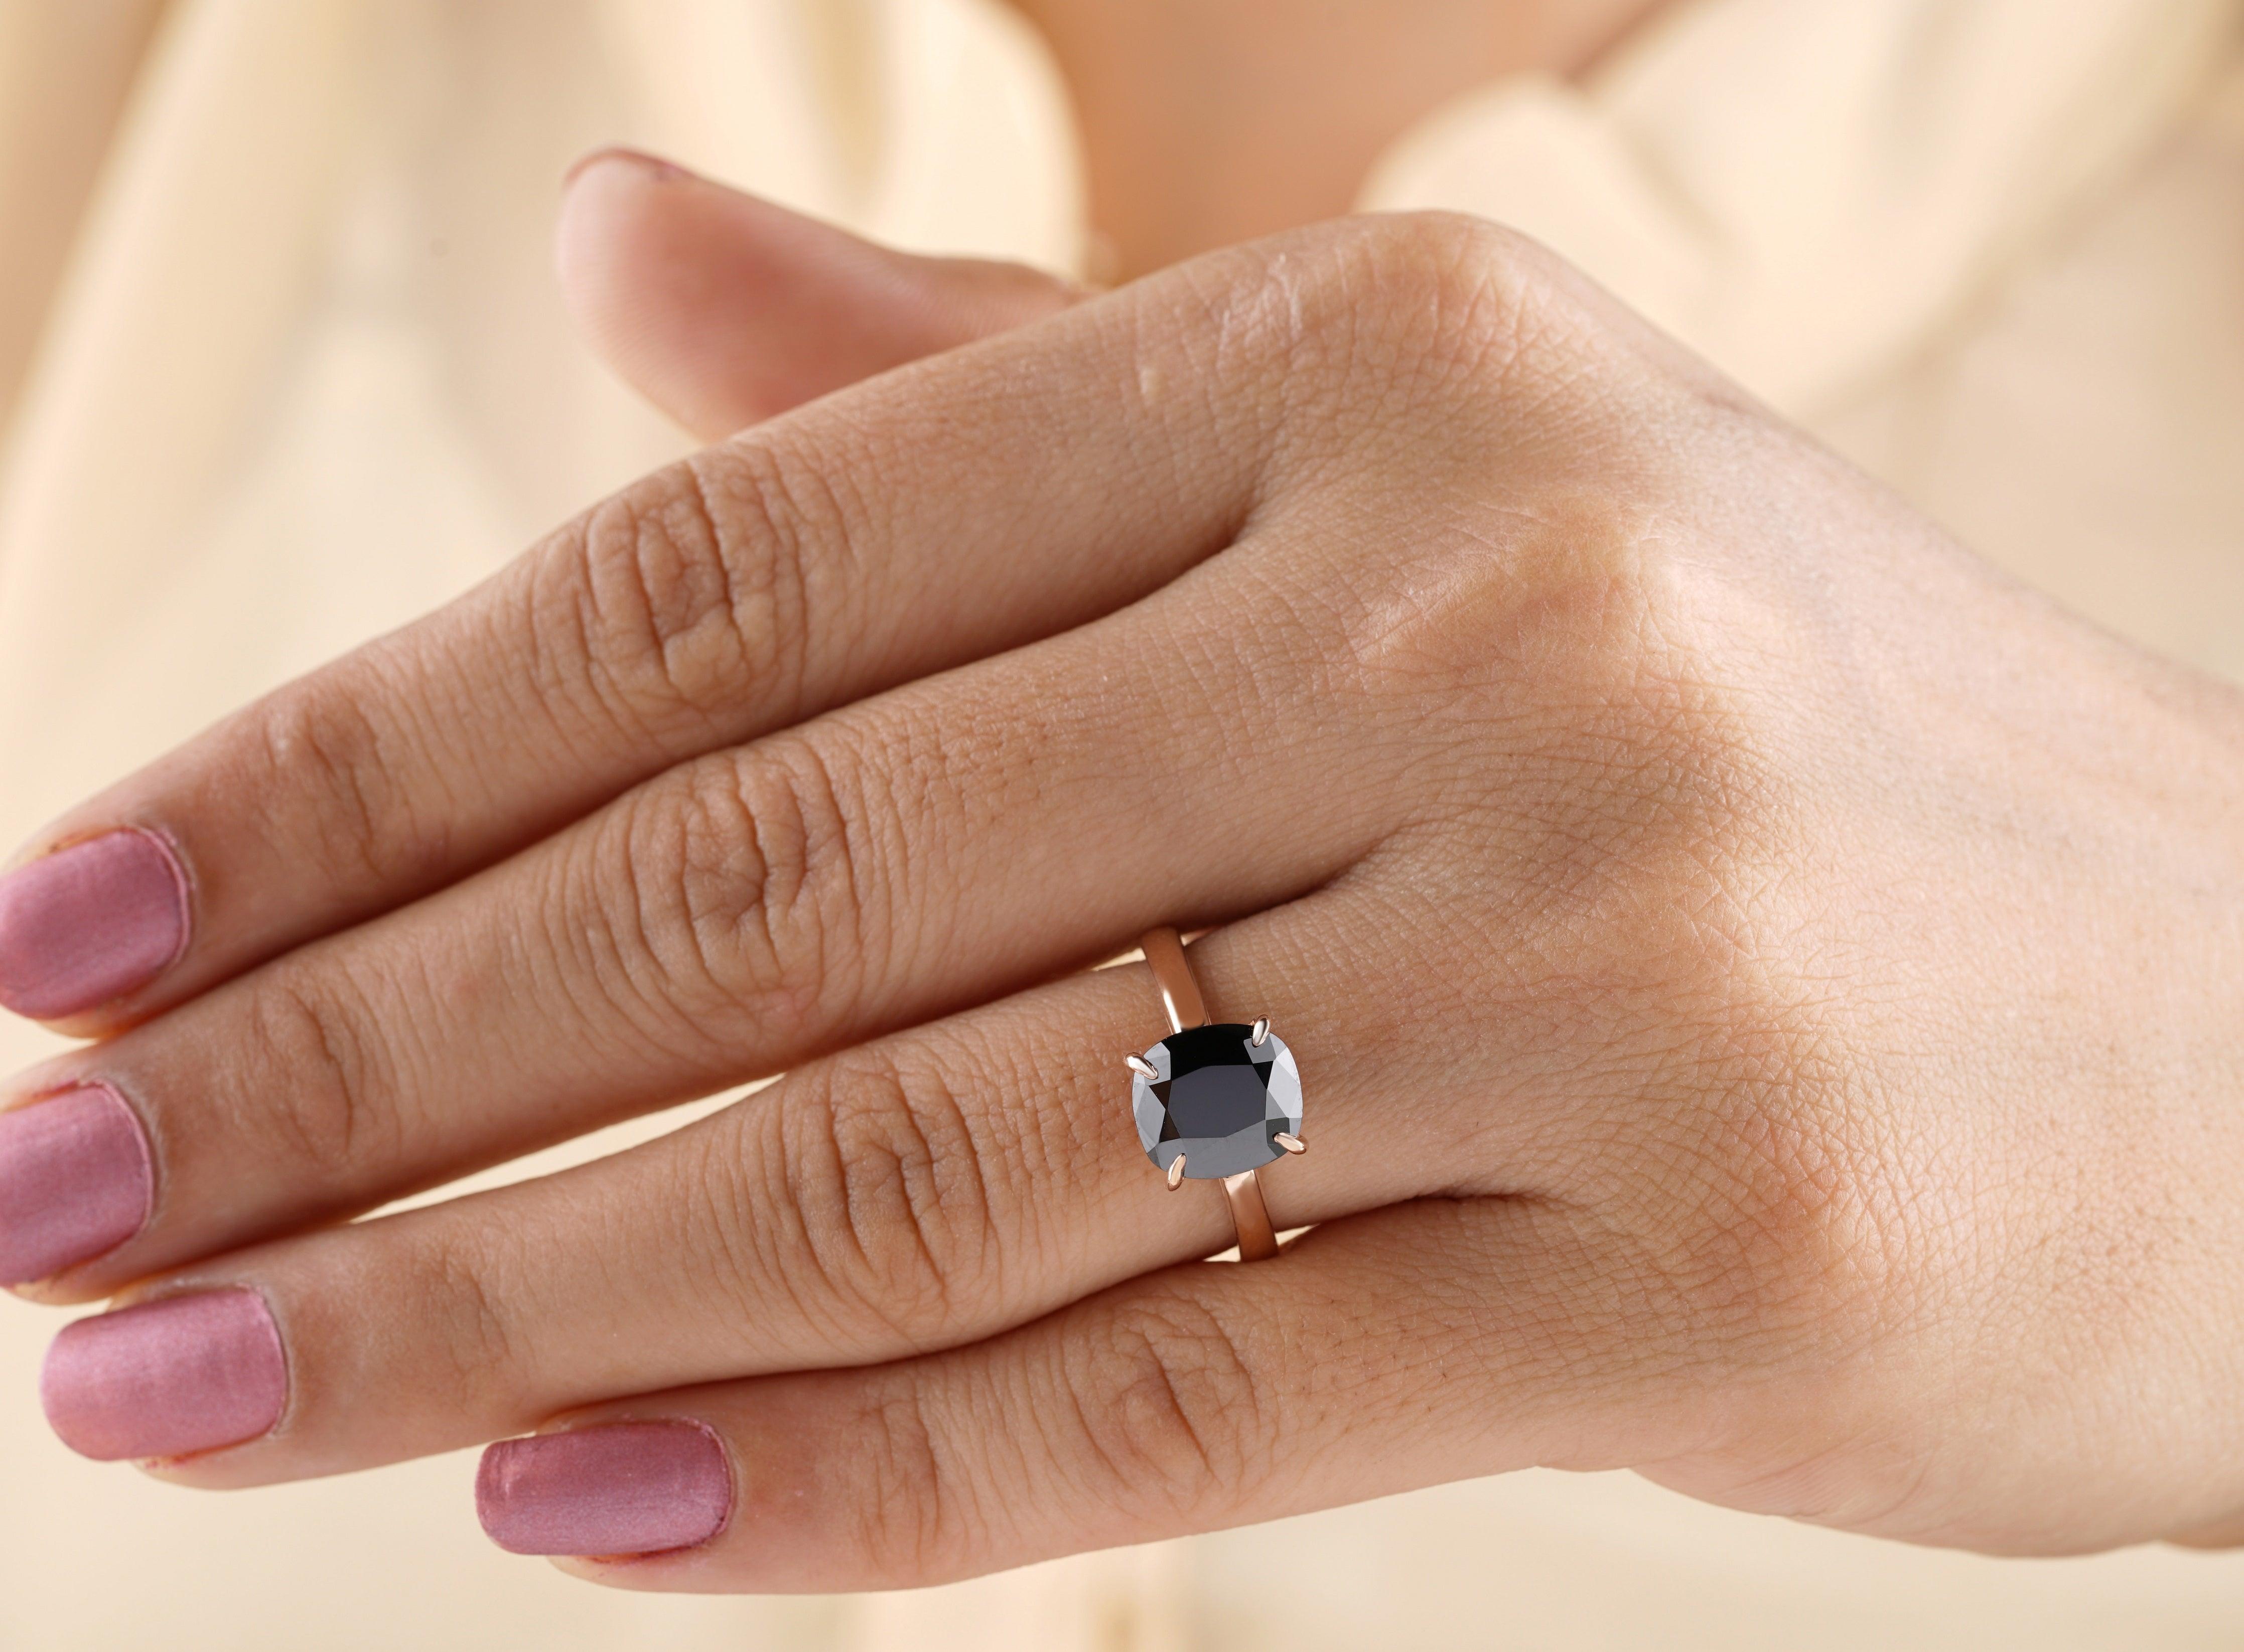 3 CT Cushion Cut Black Onyx Diamond Engagement Ring - Eurekalook